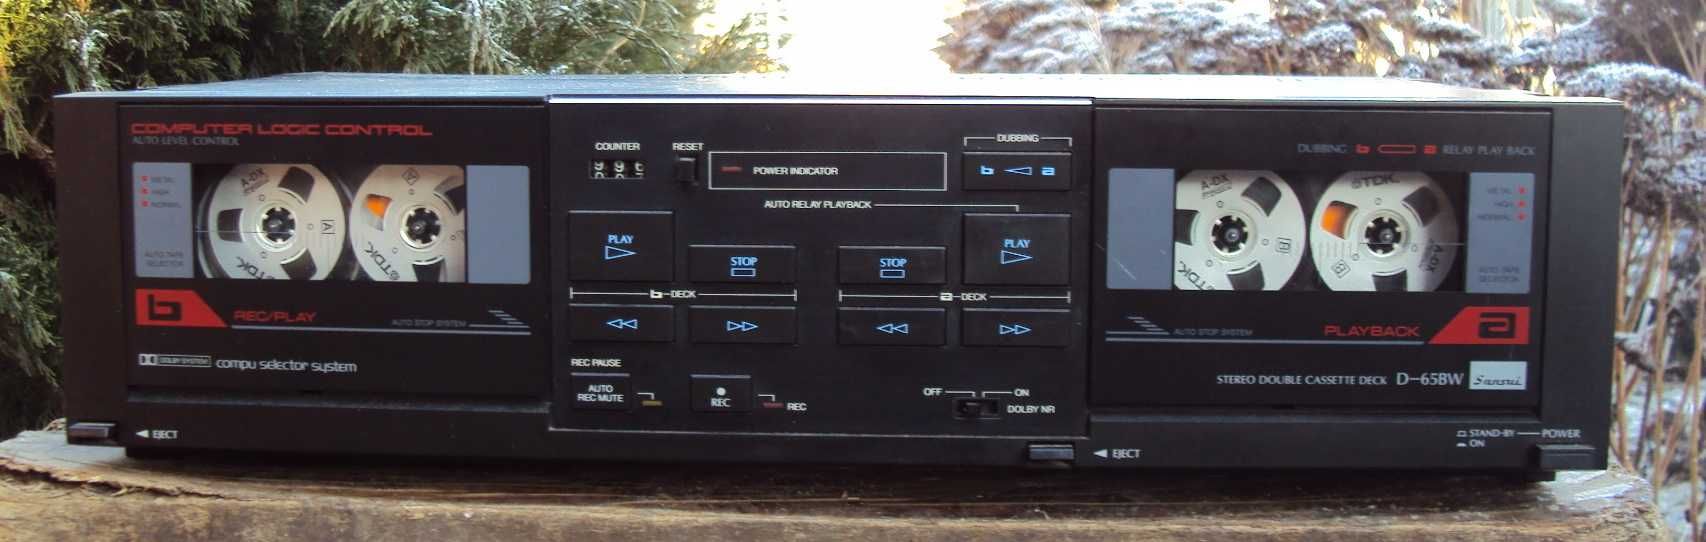 SANSUI D-65BW рабочая кассетная дека/ не SANYO/vintage